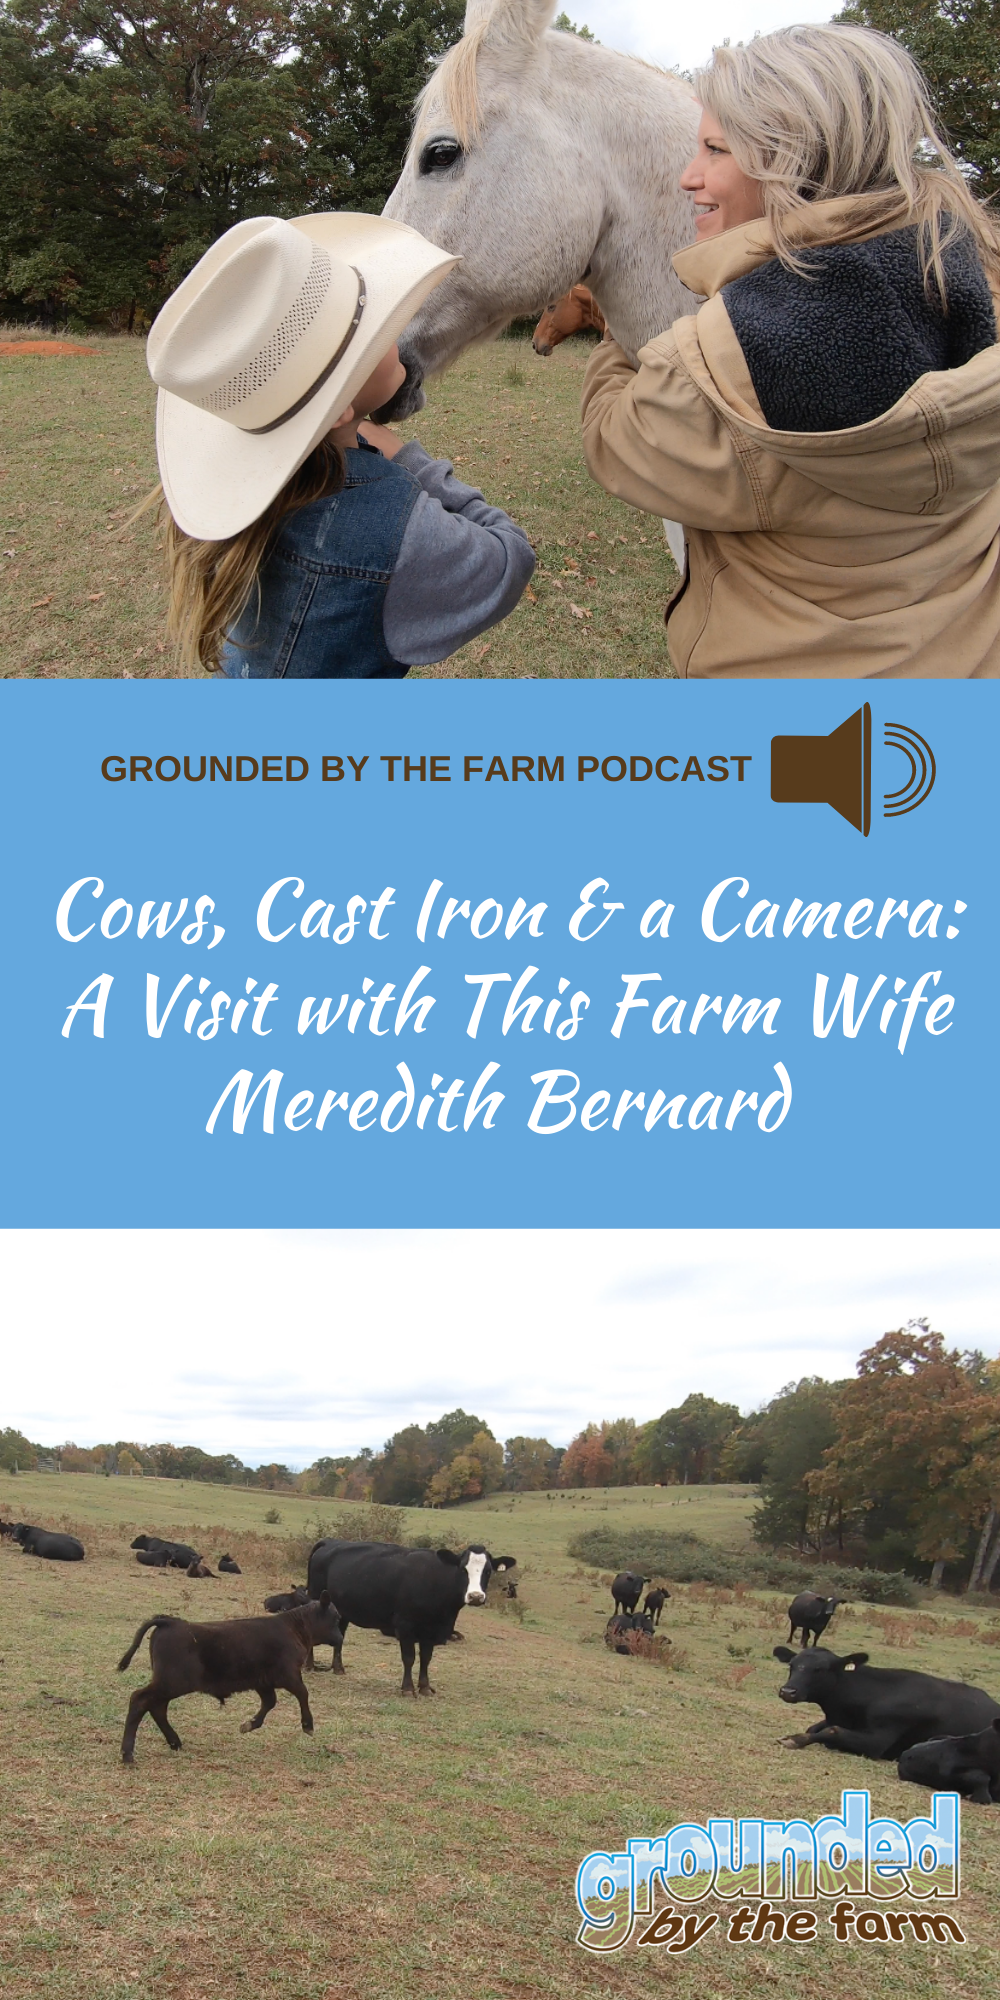 This Farm Wife Meredith Bernard on Grounded by the Farm